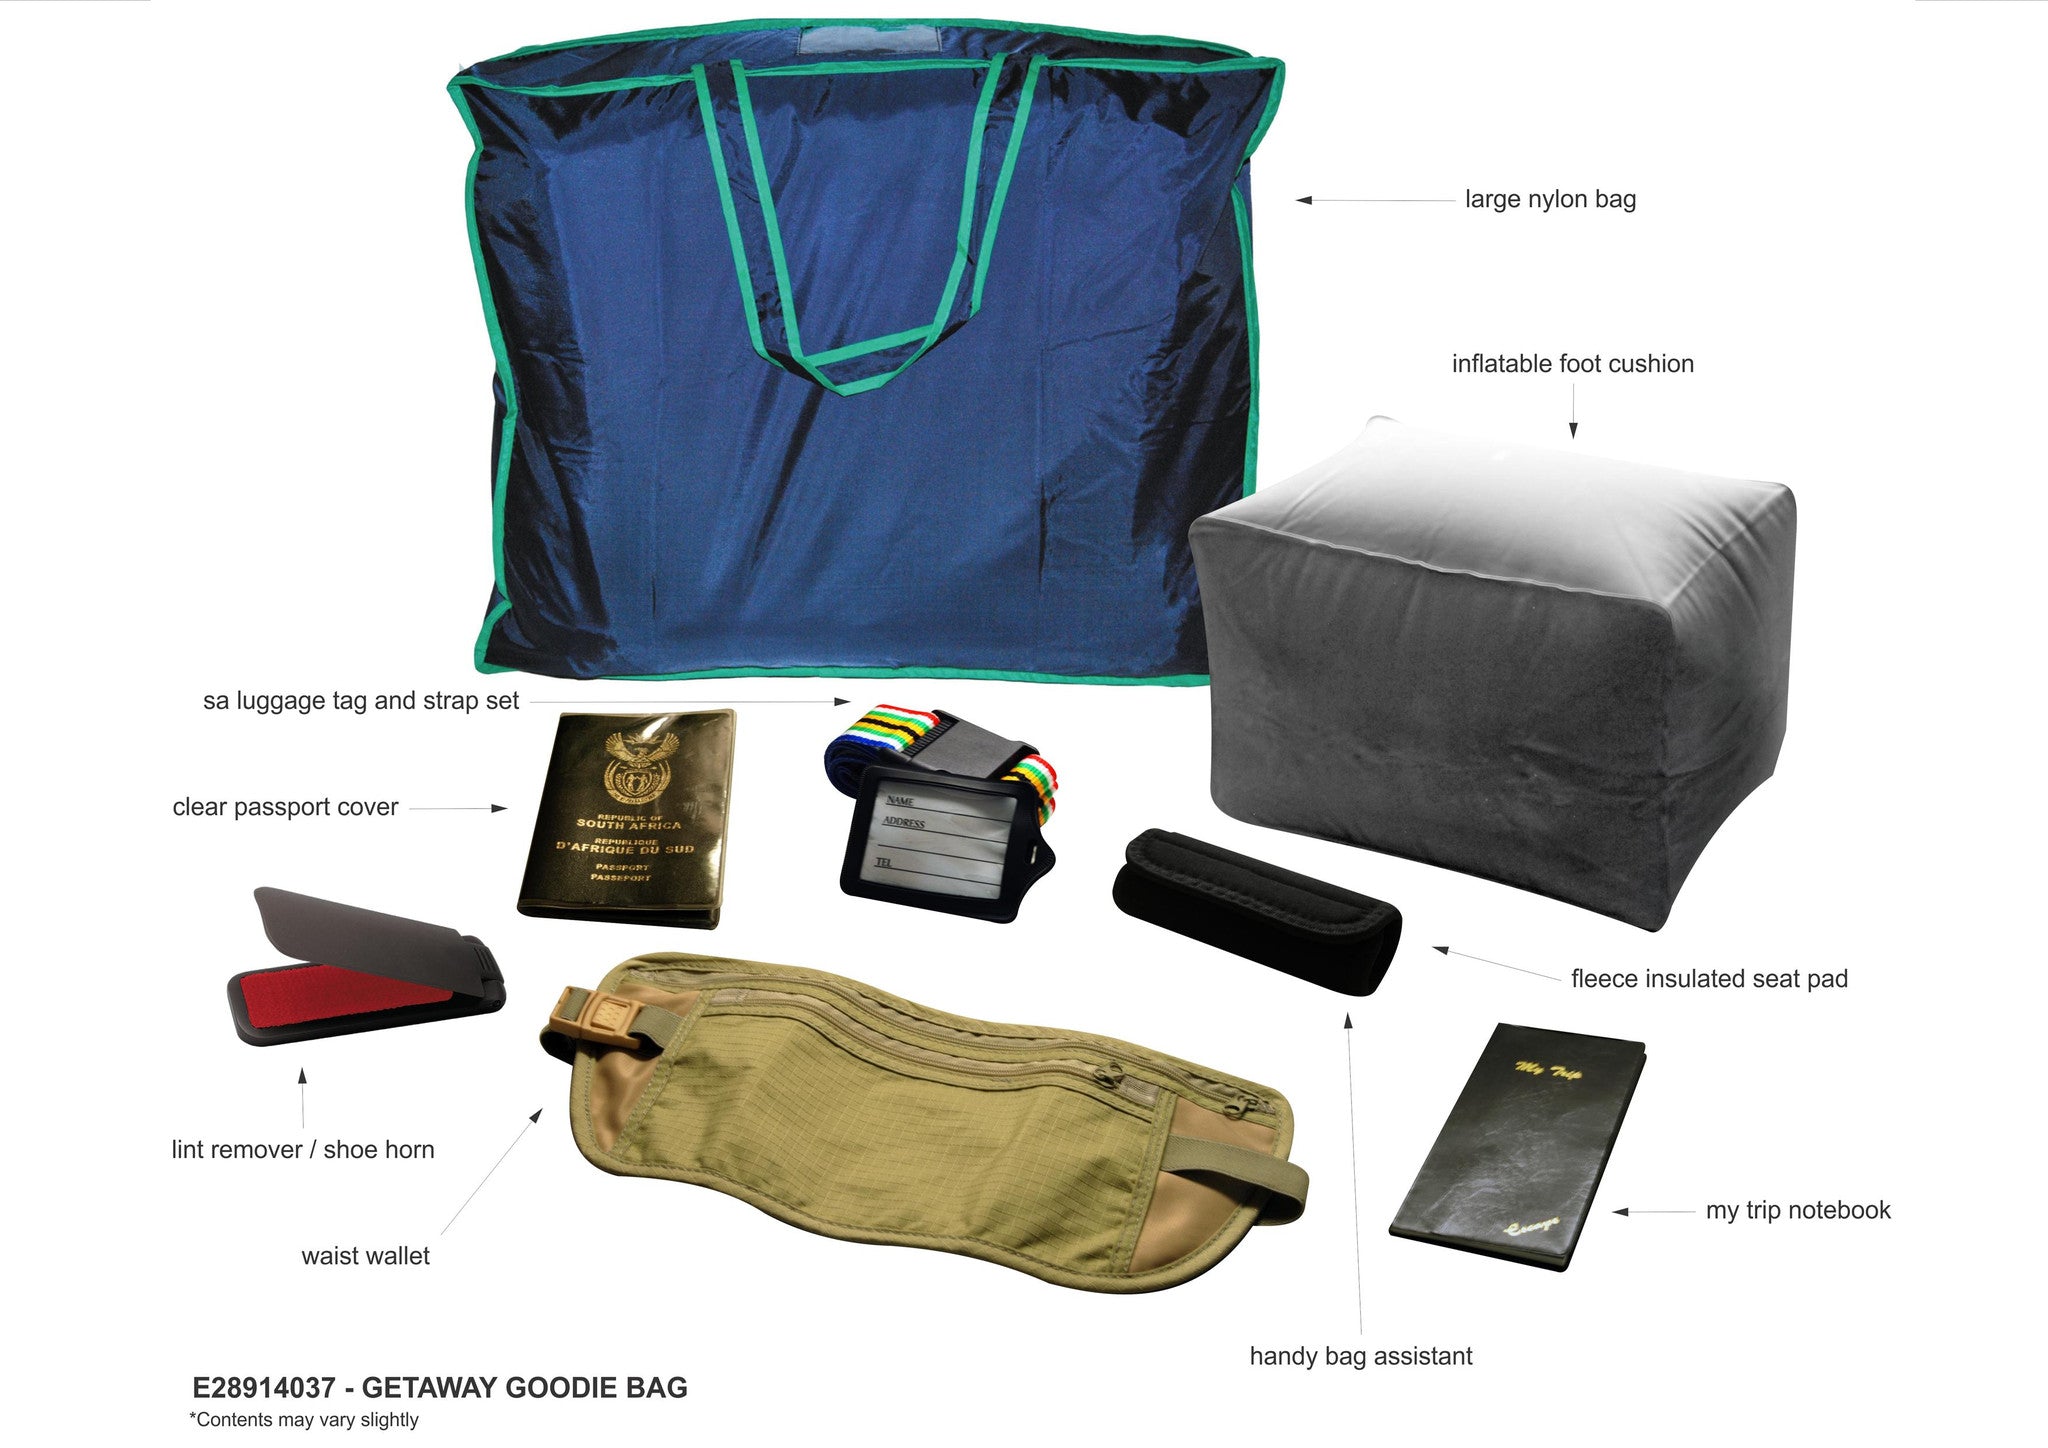 Getaway goodie bag with travel accessories